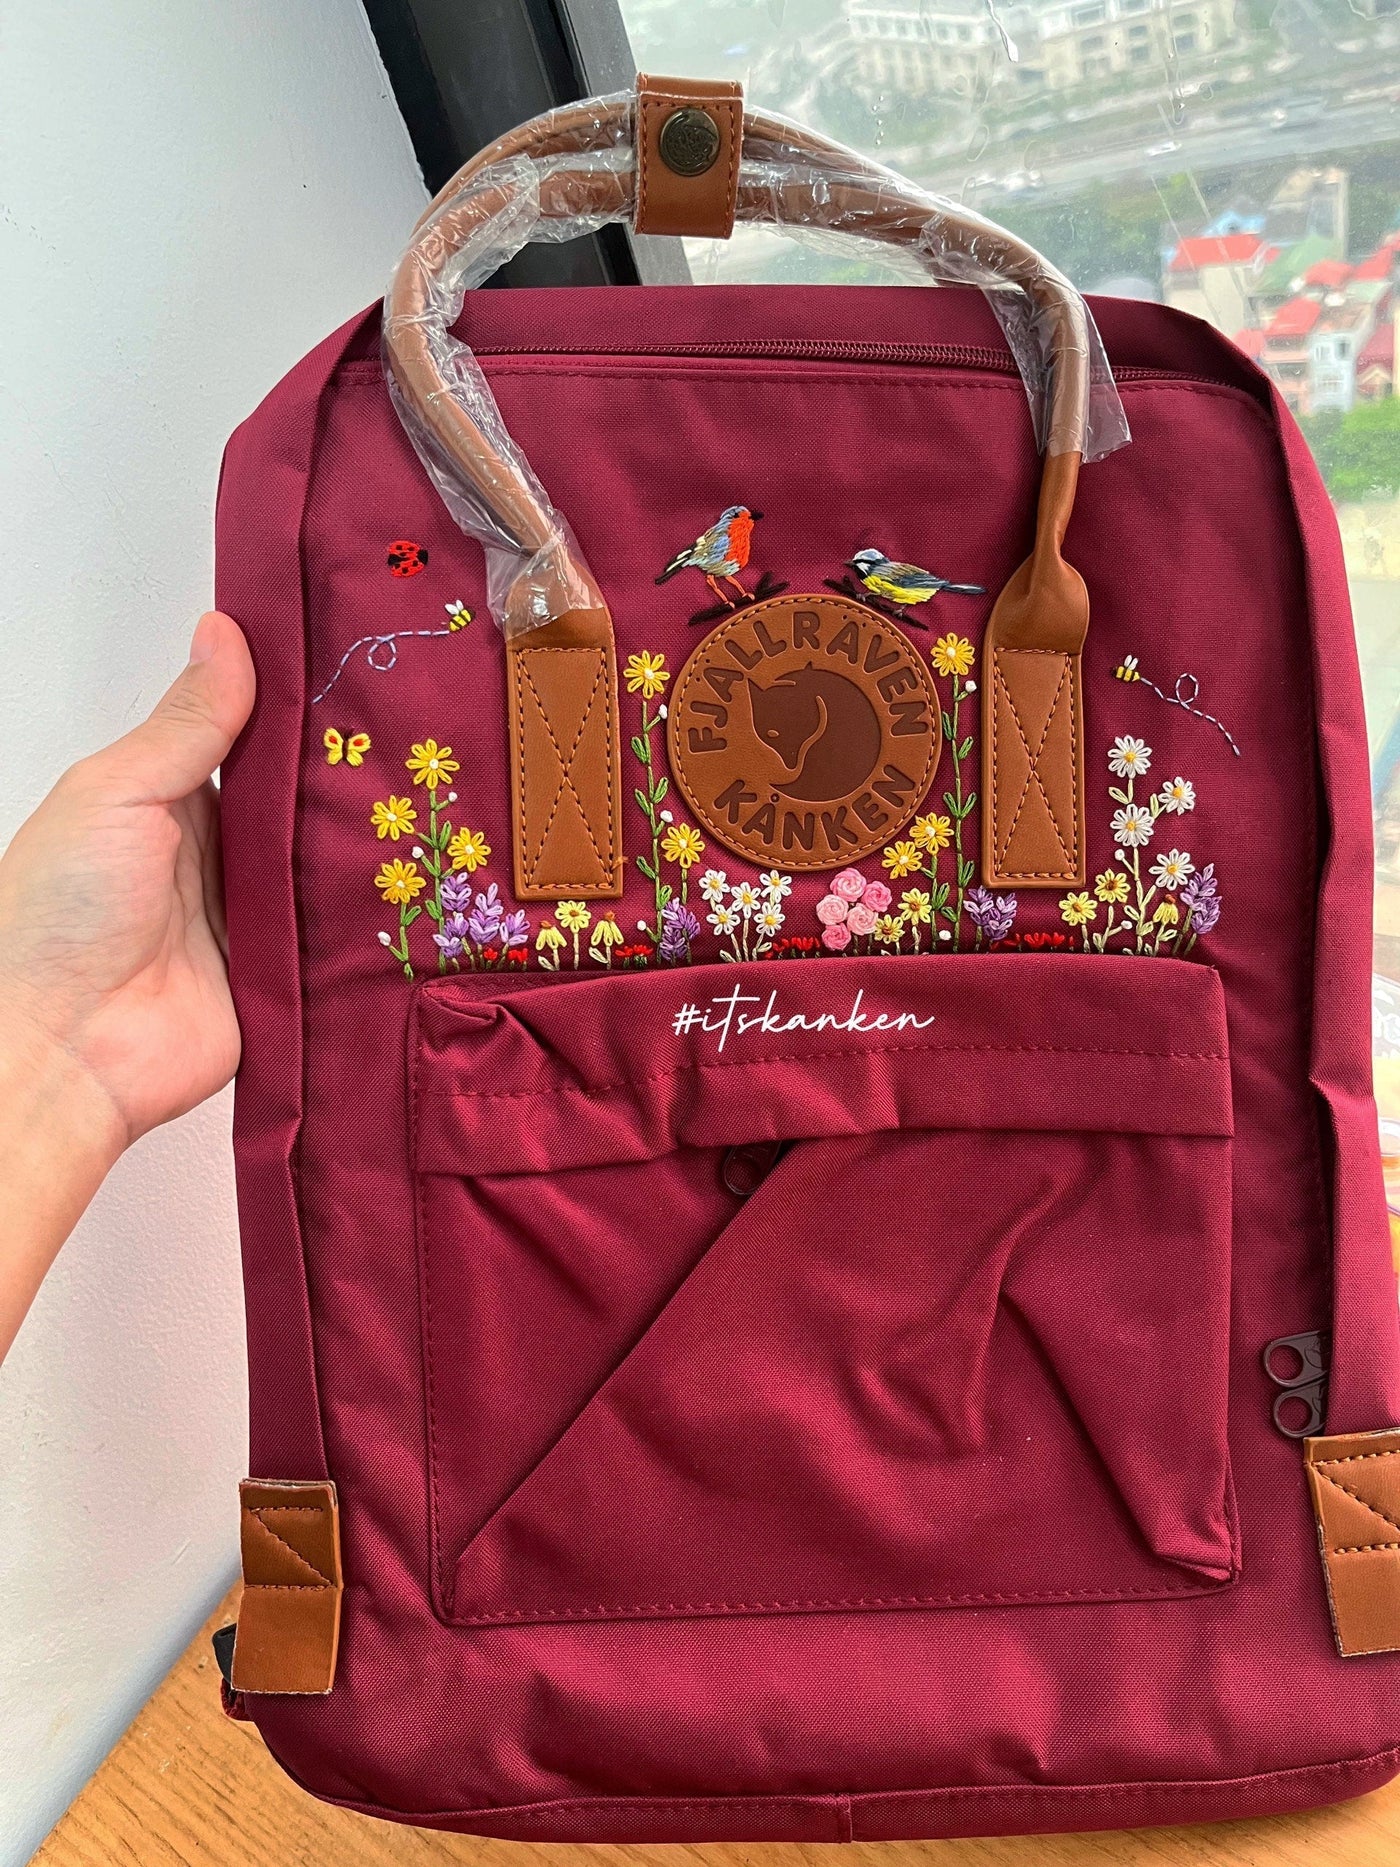 Kaken Backpack Colorful Flowers Embroidery